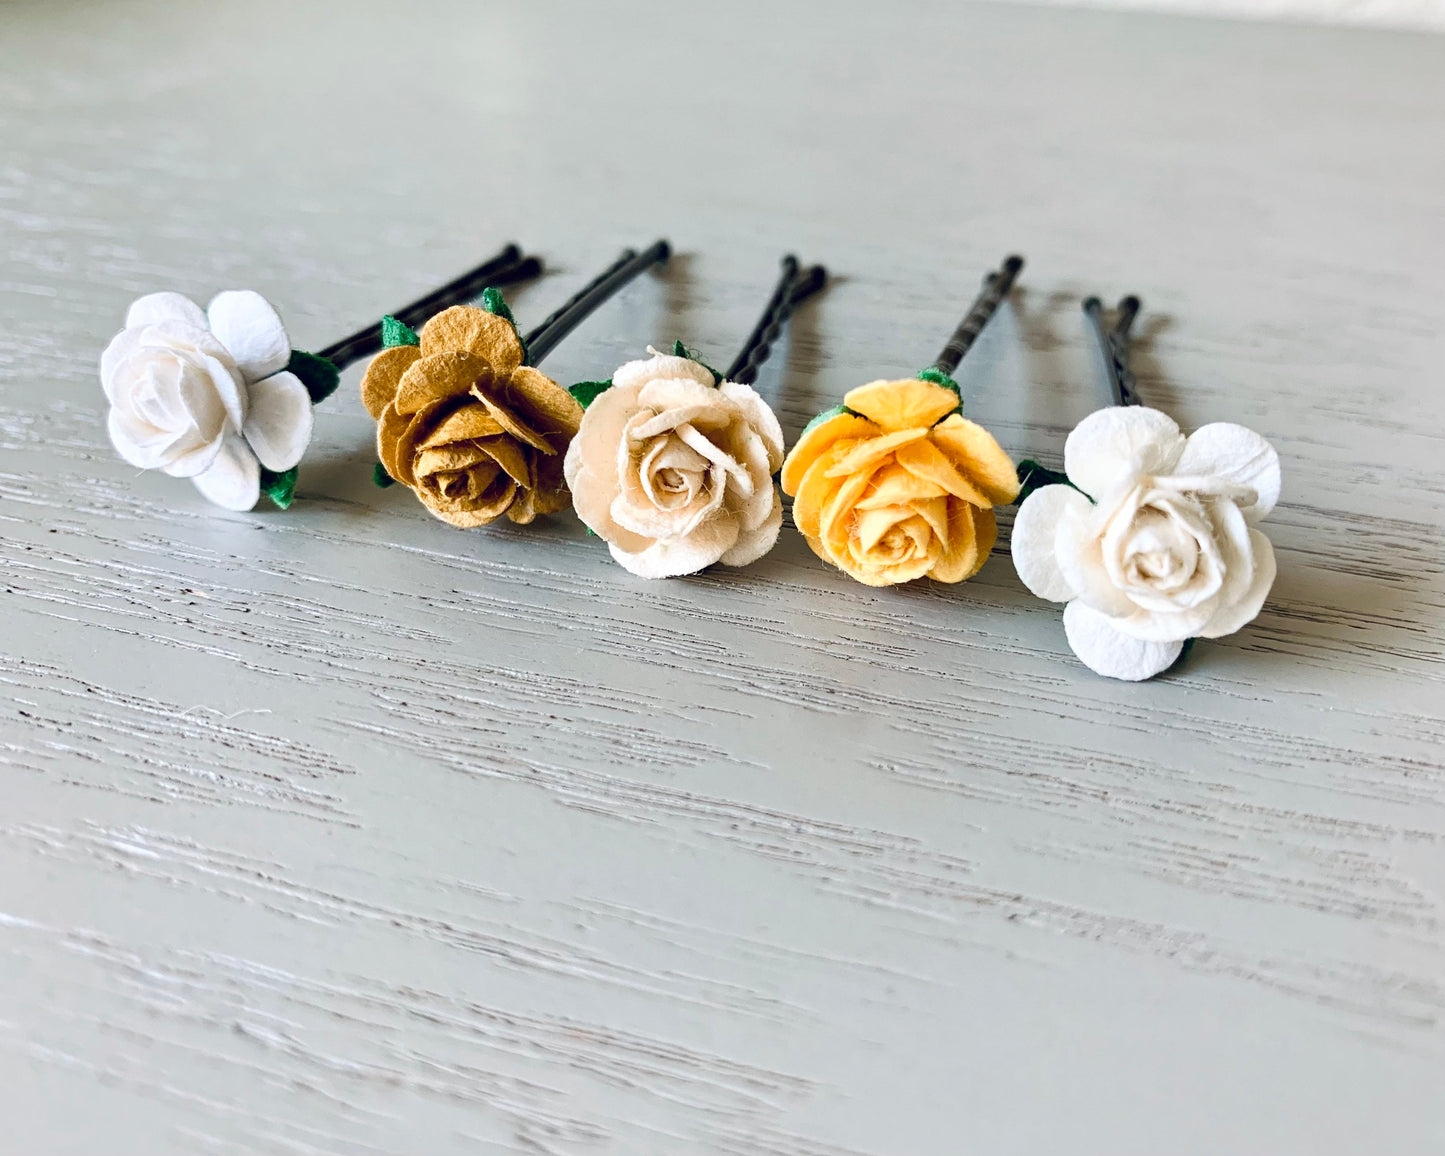 Golden Hour Rose Hair Pins, Set of 5 Paper Flower Bobby Pins in Rust Orange, Cream + Soft Gold, Rustic Bridal Hair Accessories Bohemian Wedding MPR6